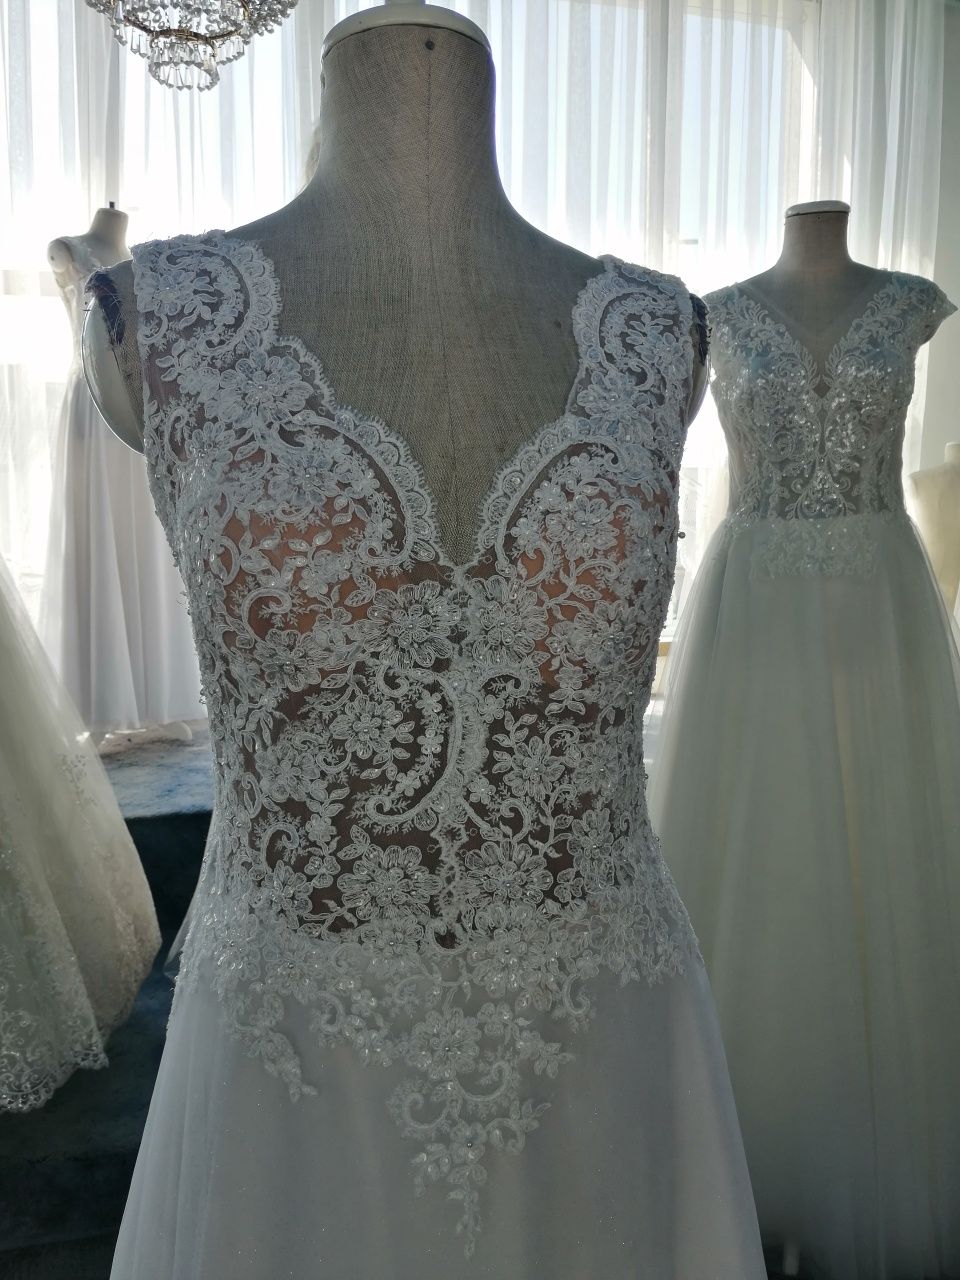 Piękna koronkowa suknia ślubna!!